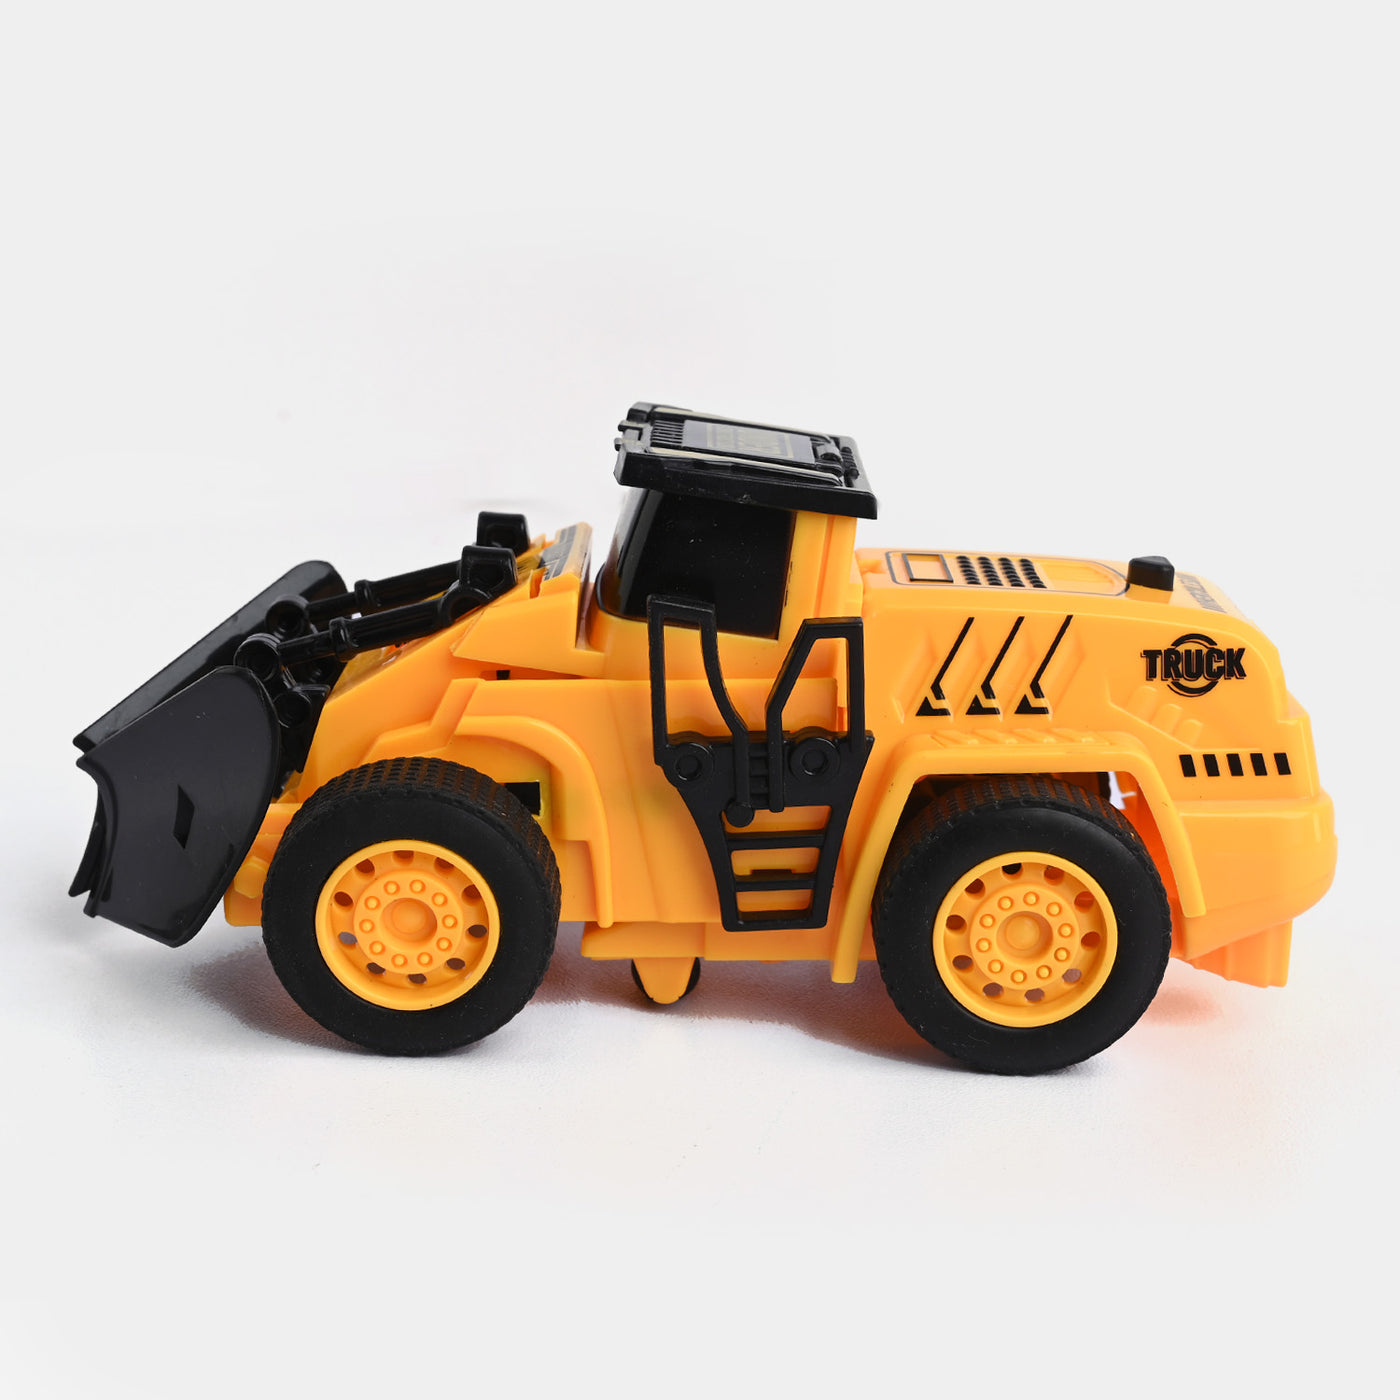 Transformation Dinkey Truck  Toy For Kids